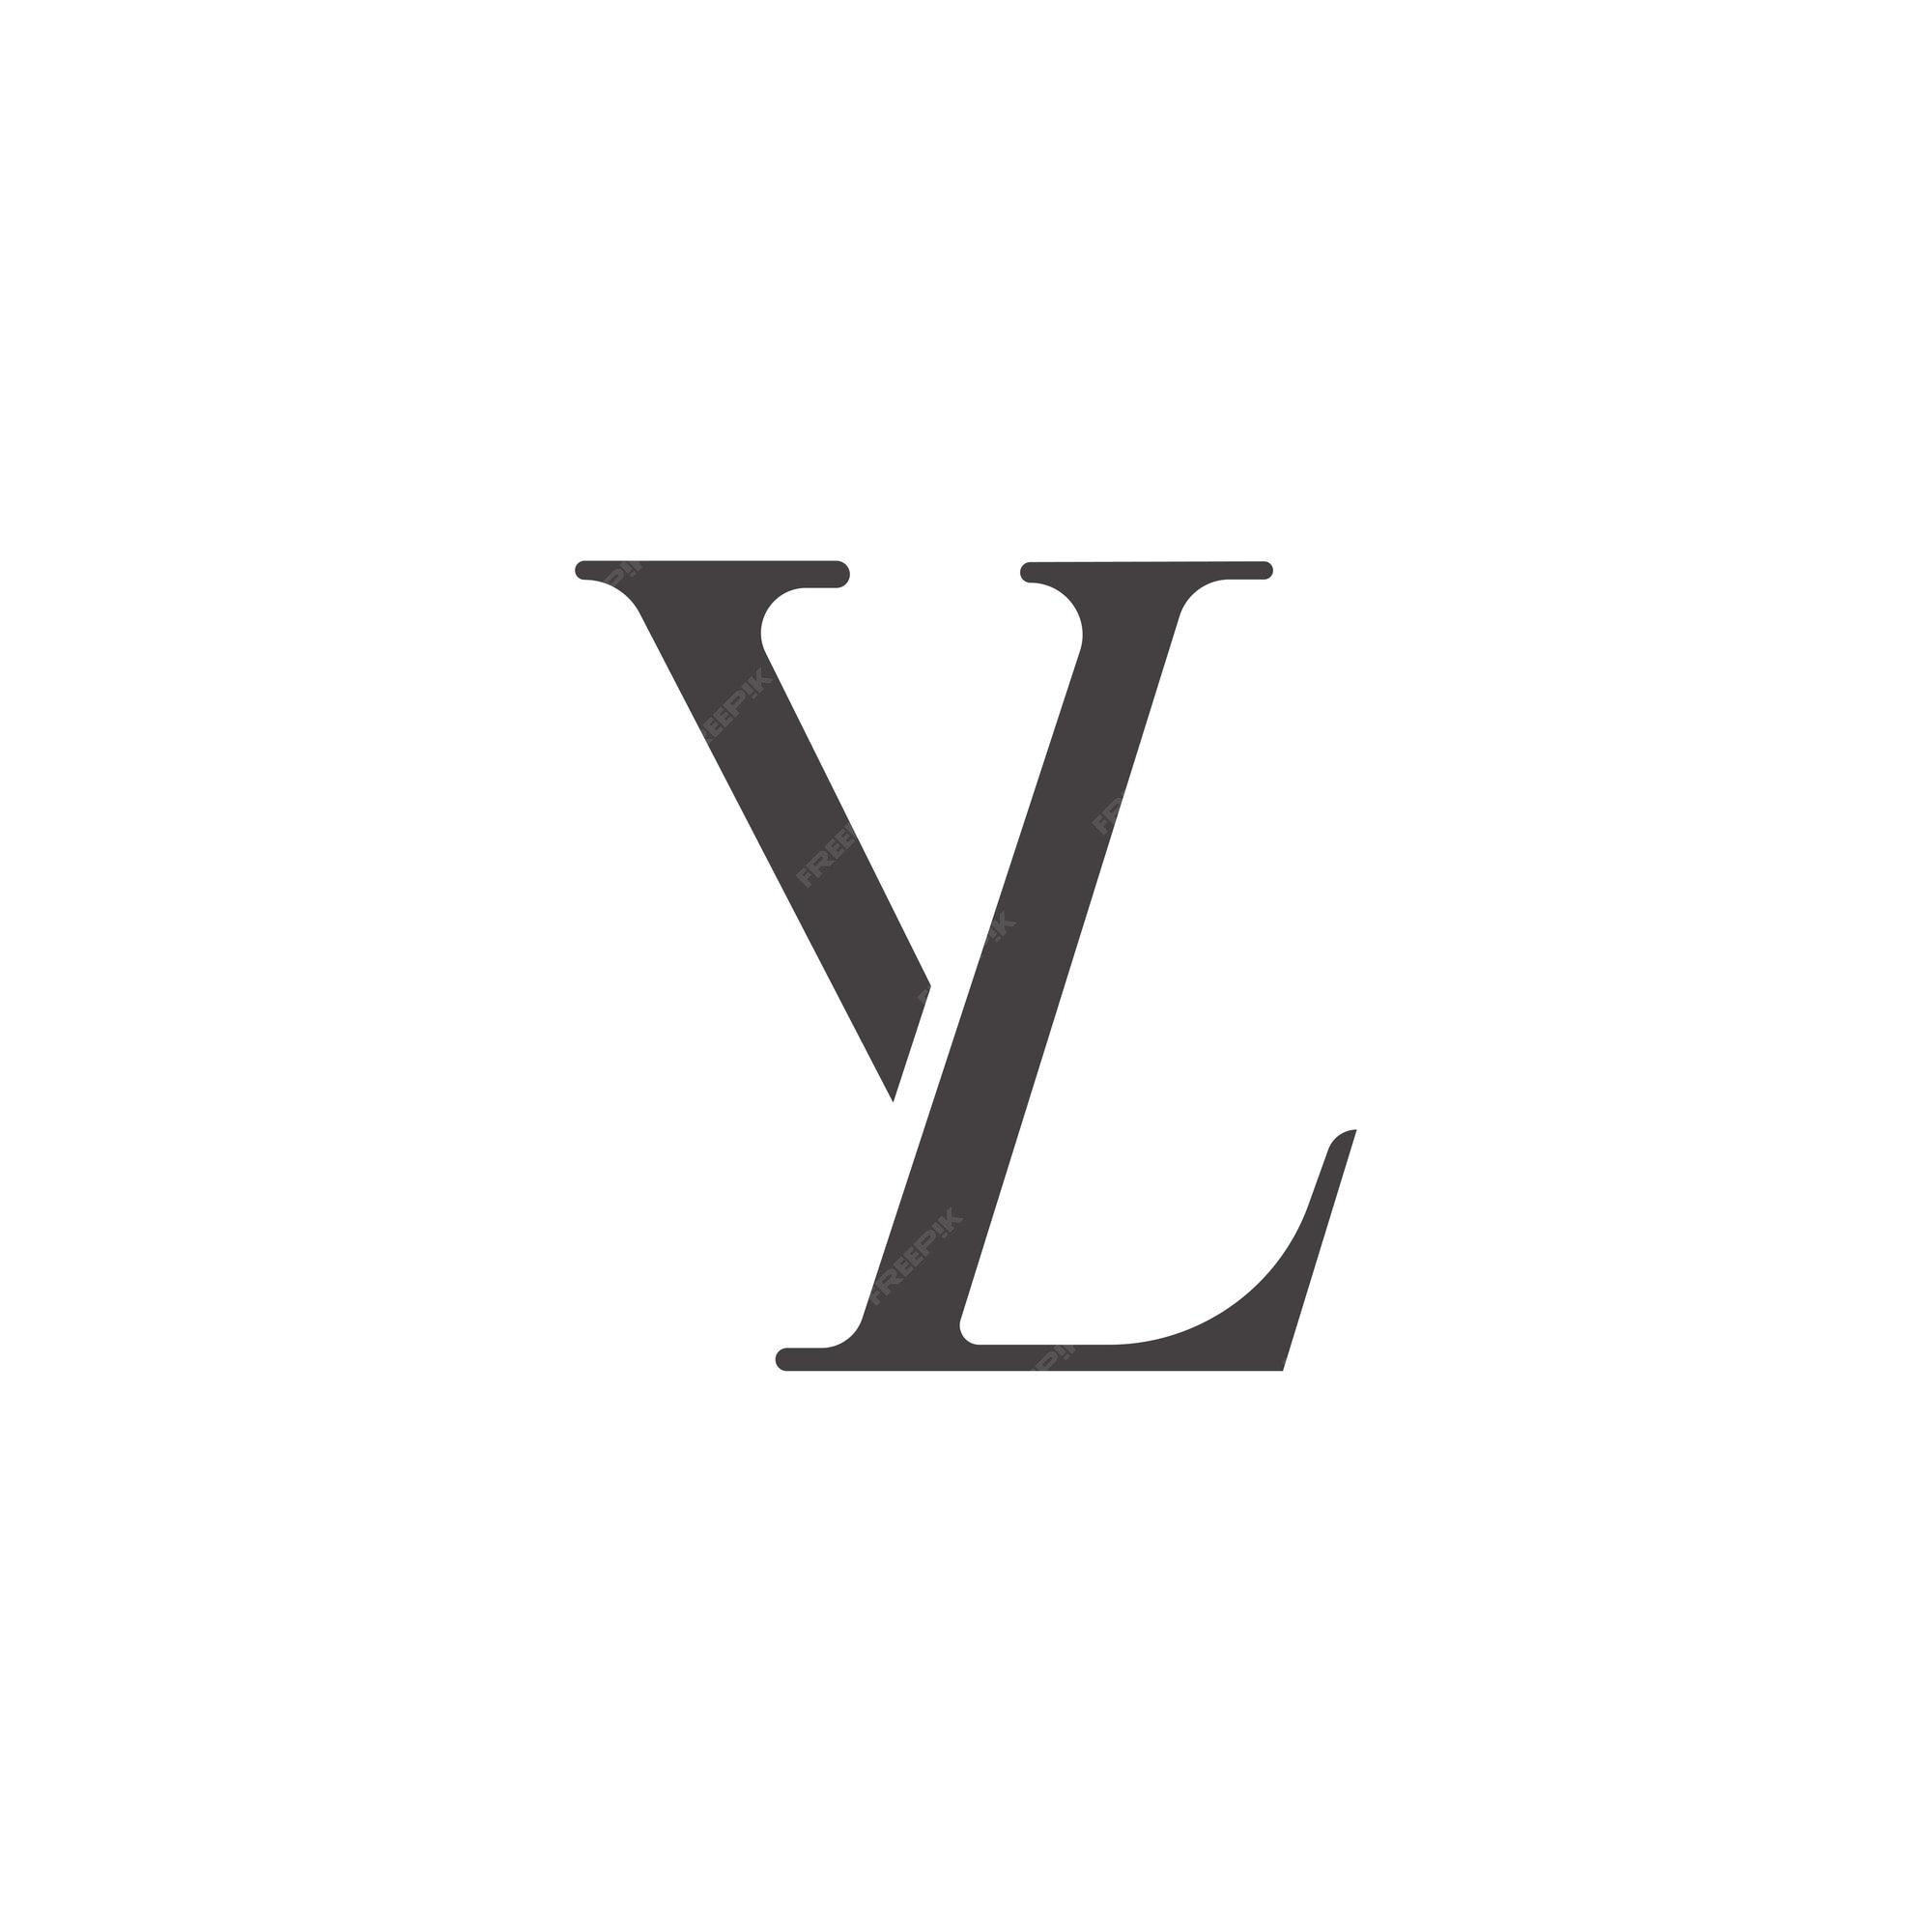 yl logo initial logo vector modern blue fold style Stock Vector